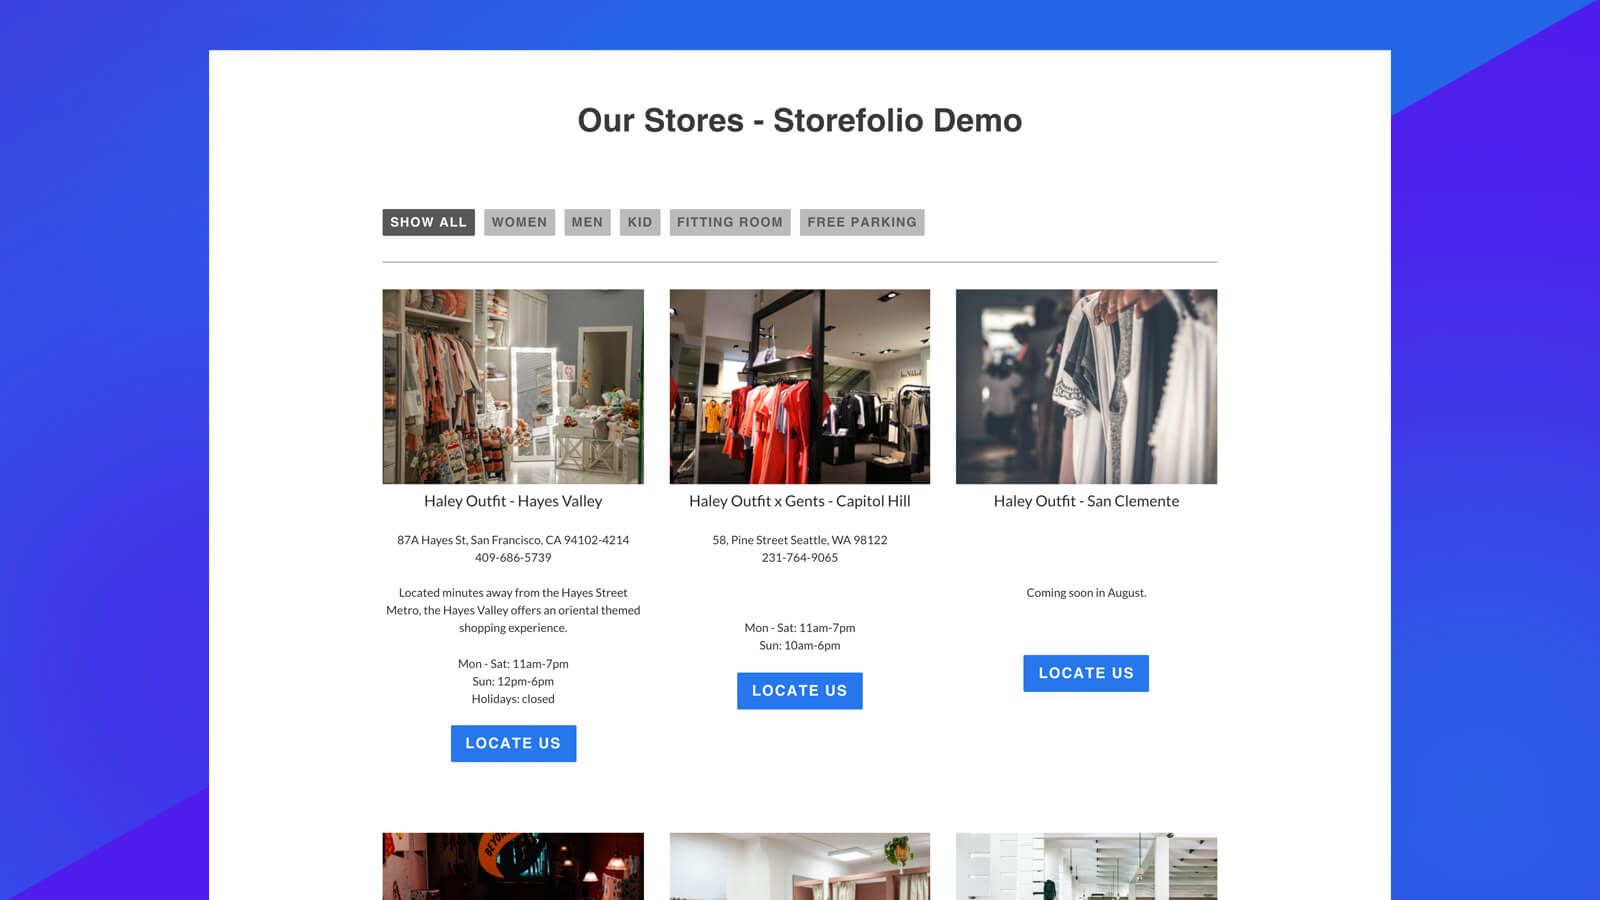 Storefolio Photo Gallery Style Store Locator